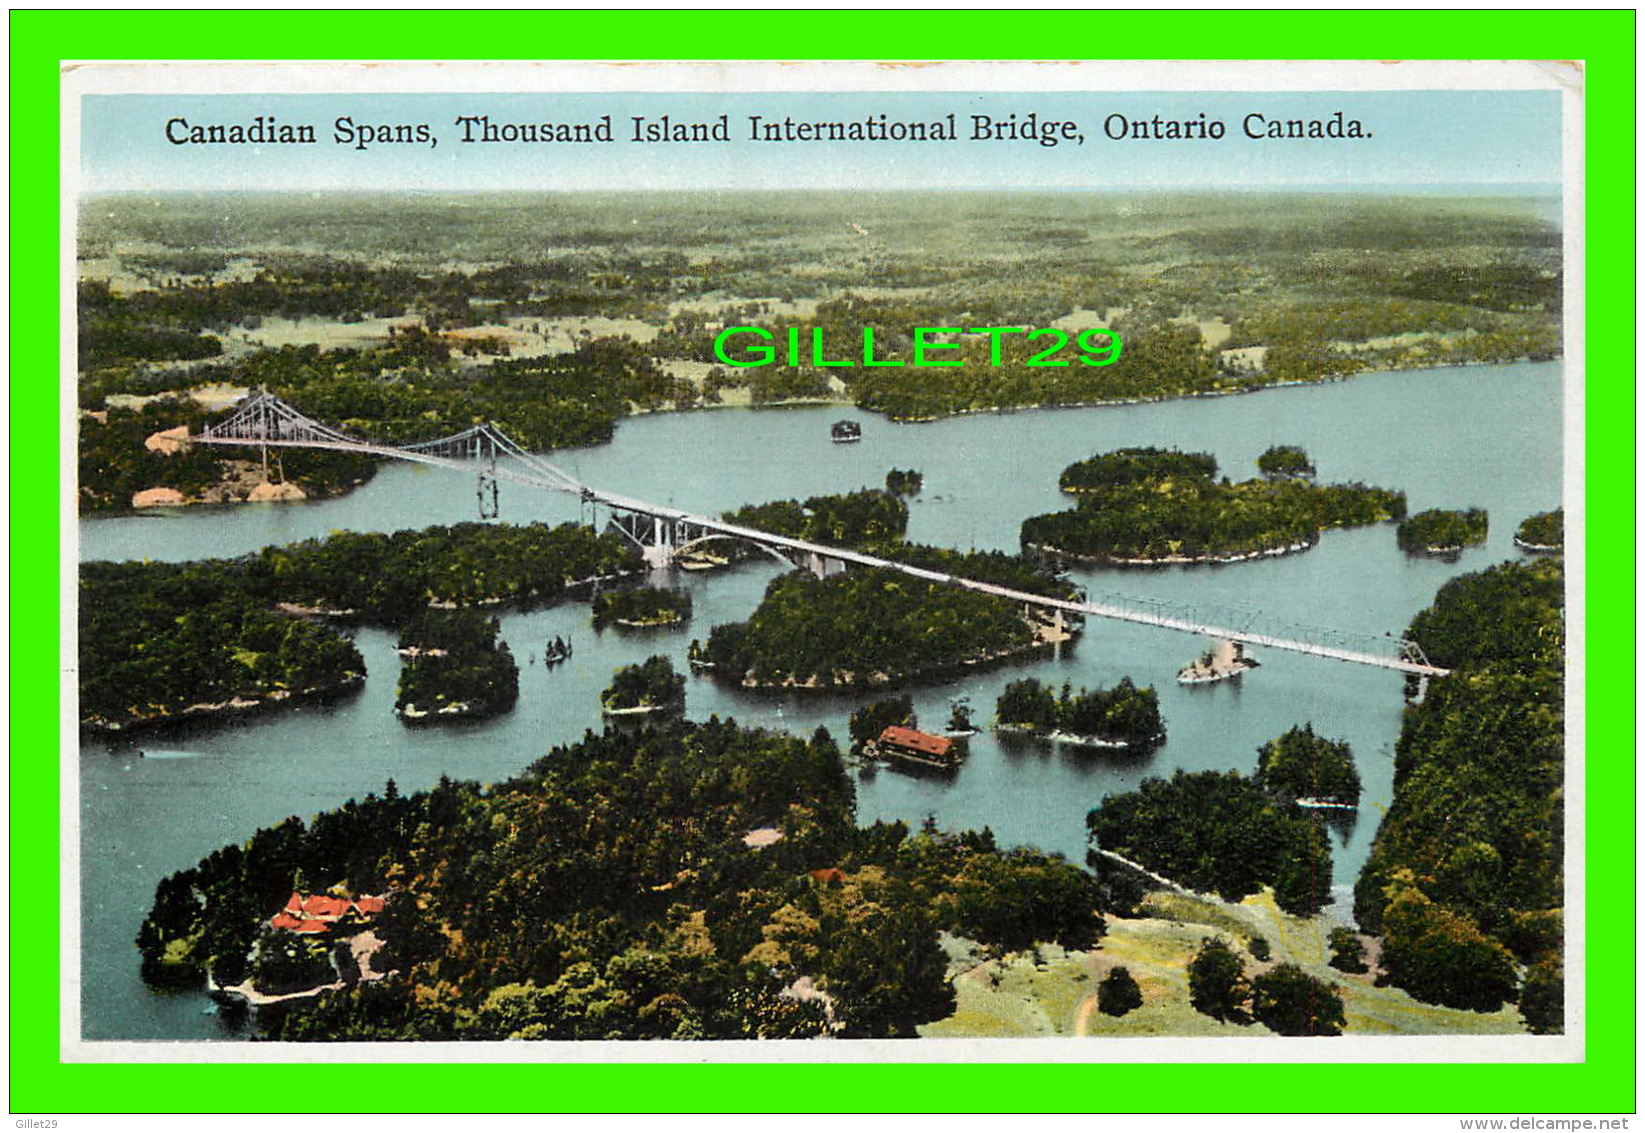 THOUSAND ISLAND, ONTARIO - CANADIAN SPANS, THOUSAND ISLAND INTERNATIONAL BRIDGE - FINE ART CO LTD - - Thousand Islands